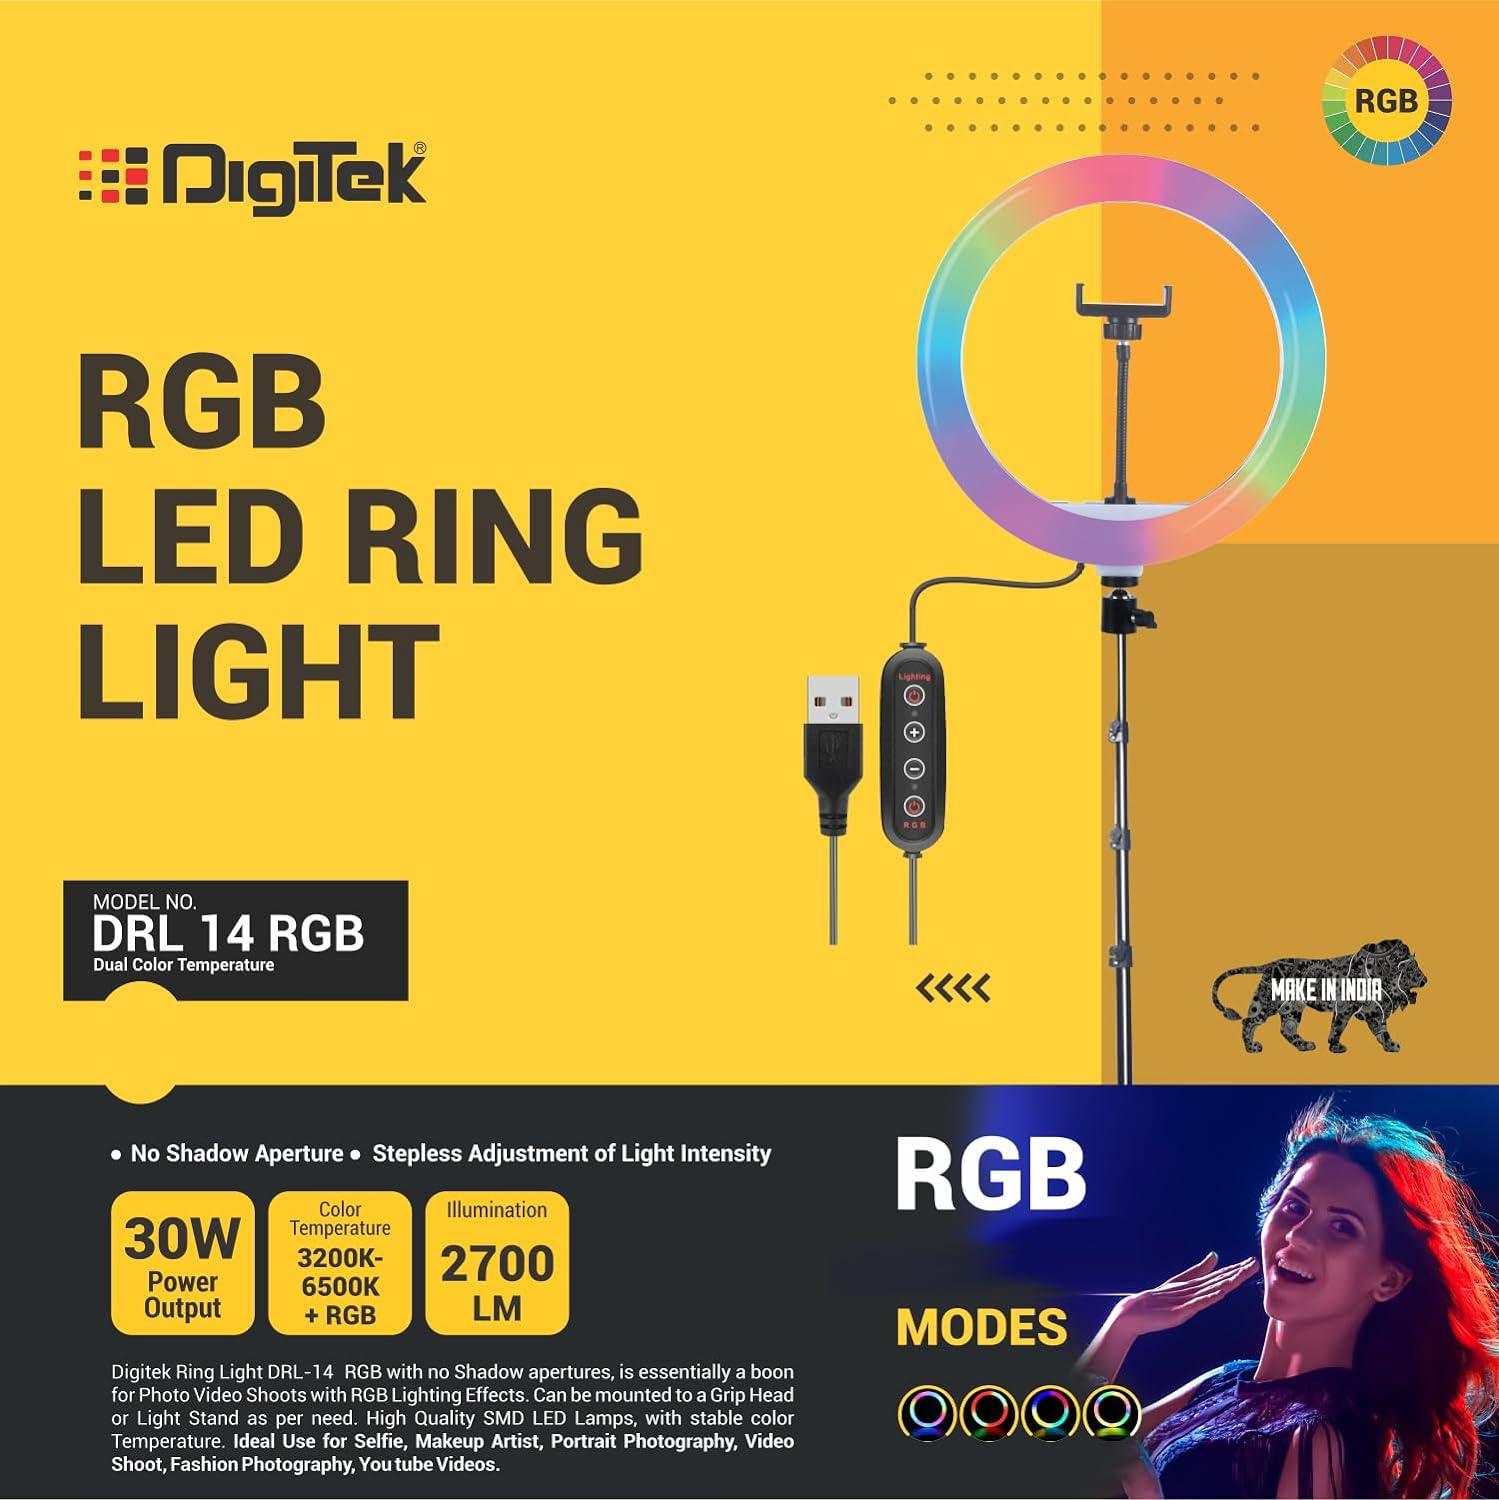 digitek drl 14 rgb 31cm led ring light for photo and video shoot live stream and more digitek 3